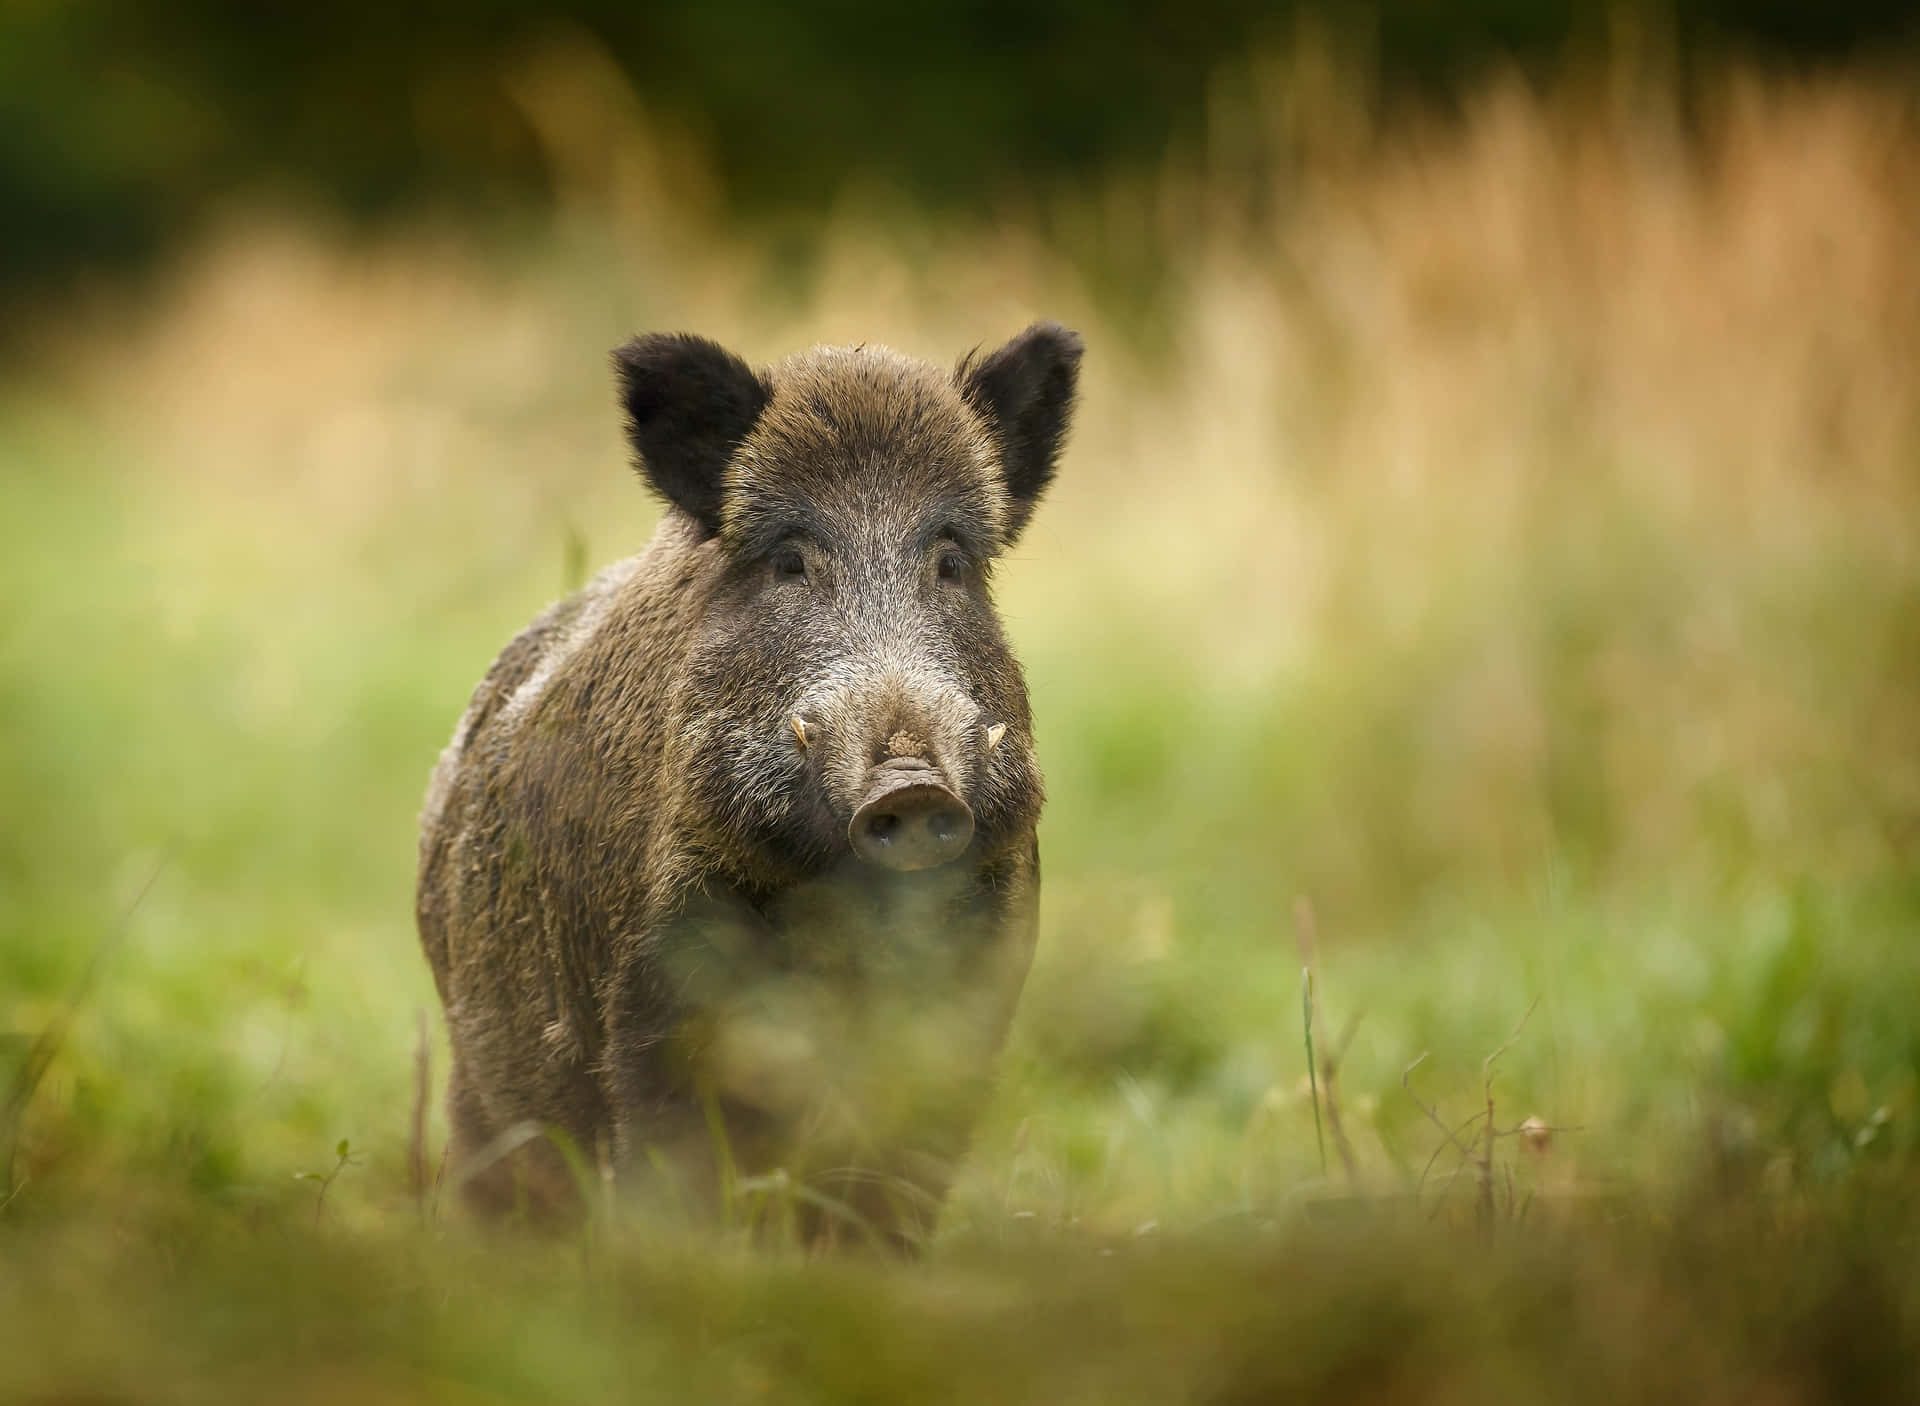 Wild boar making its way through a dense forest